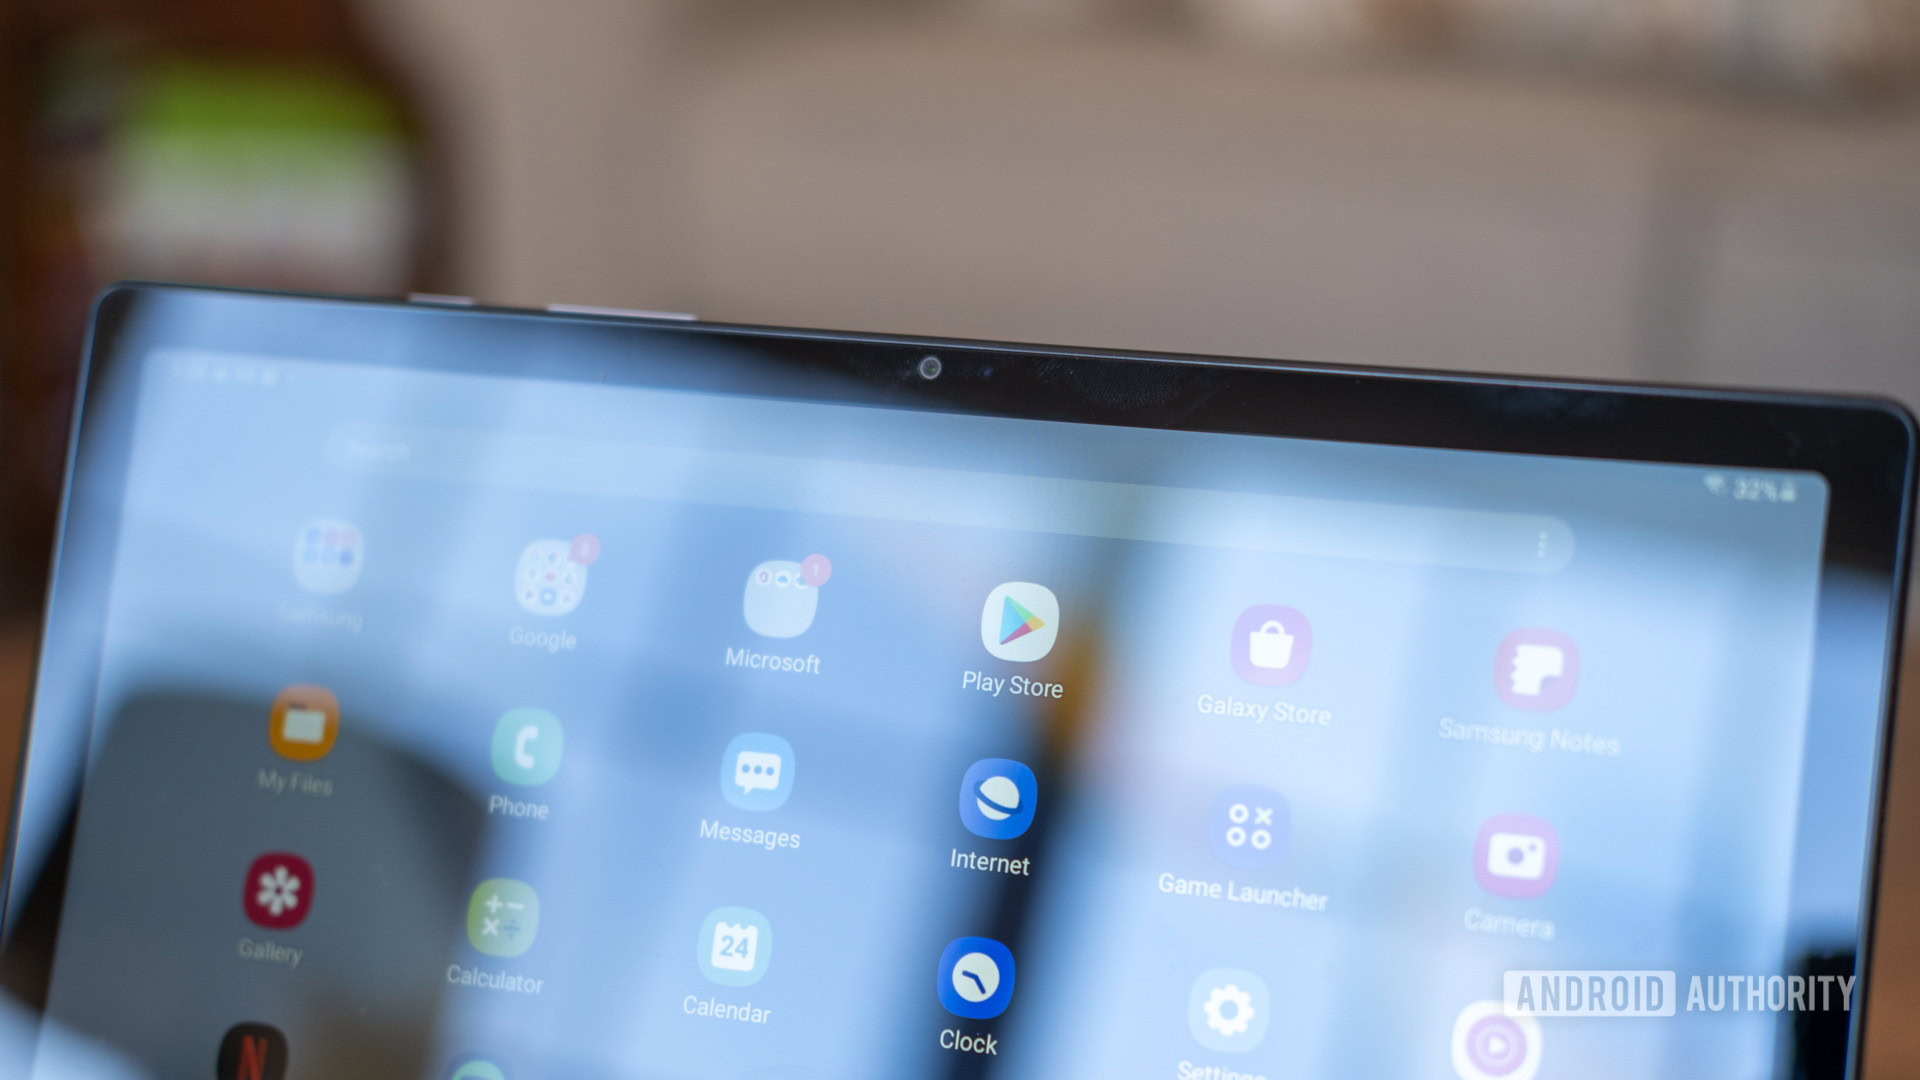 Samsung Galaxy Tab A 8.0 LTE Review » YugaTech